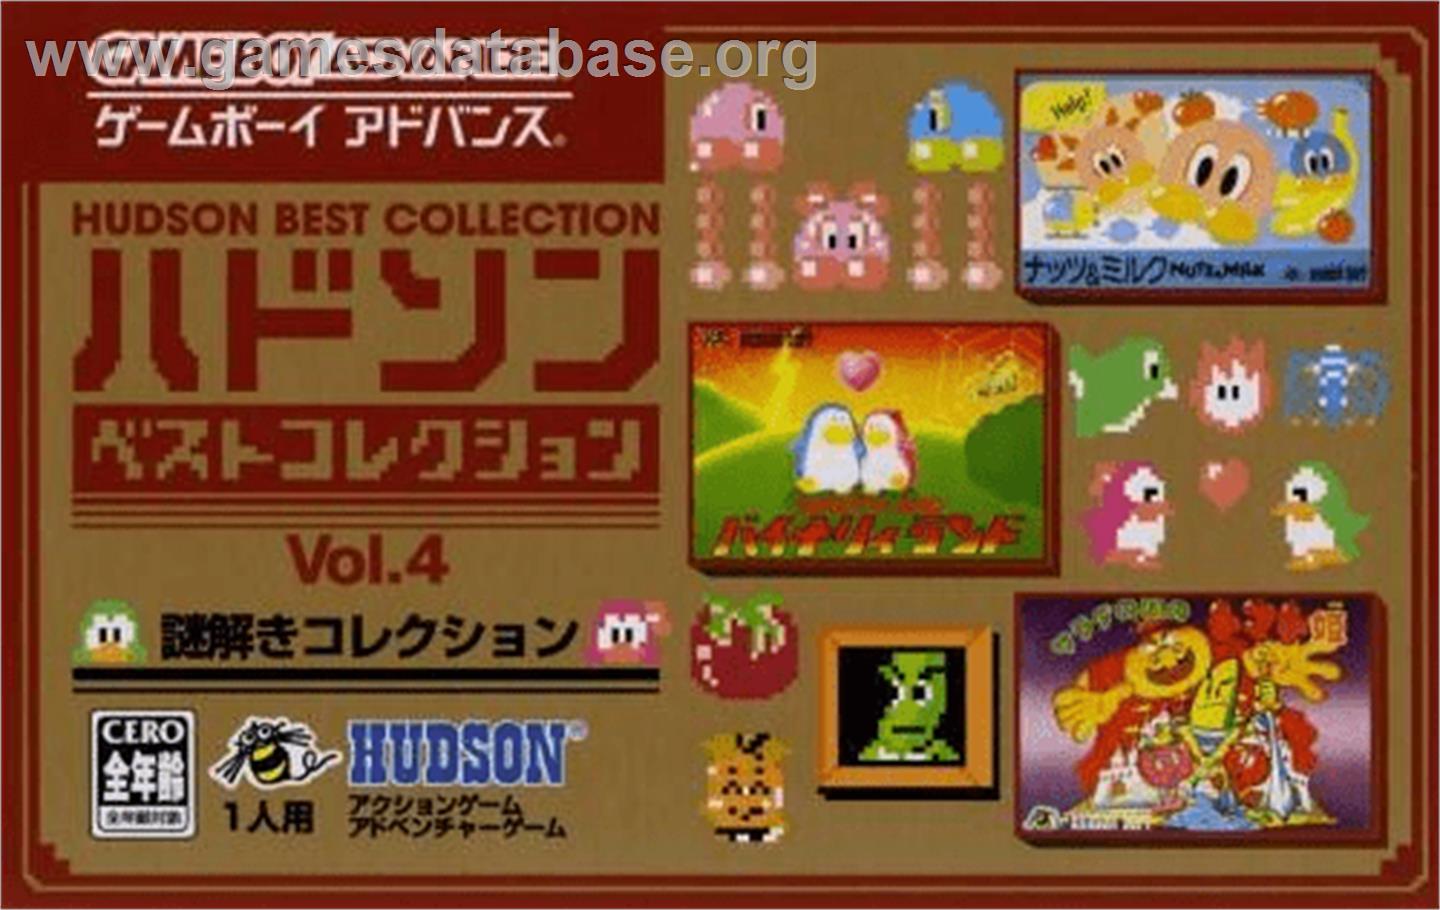 Hudson Best Collection Vol. 4: Nazotoki Collection - Nintendo Game Boy Advance - Artwork - Box